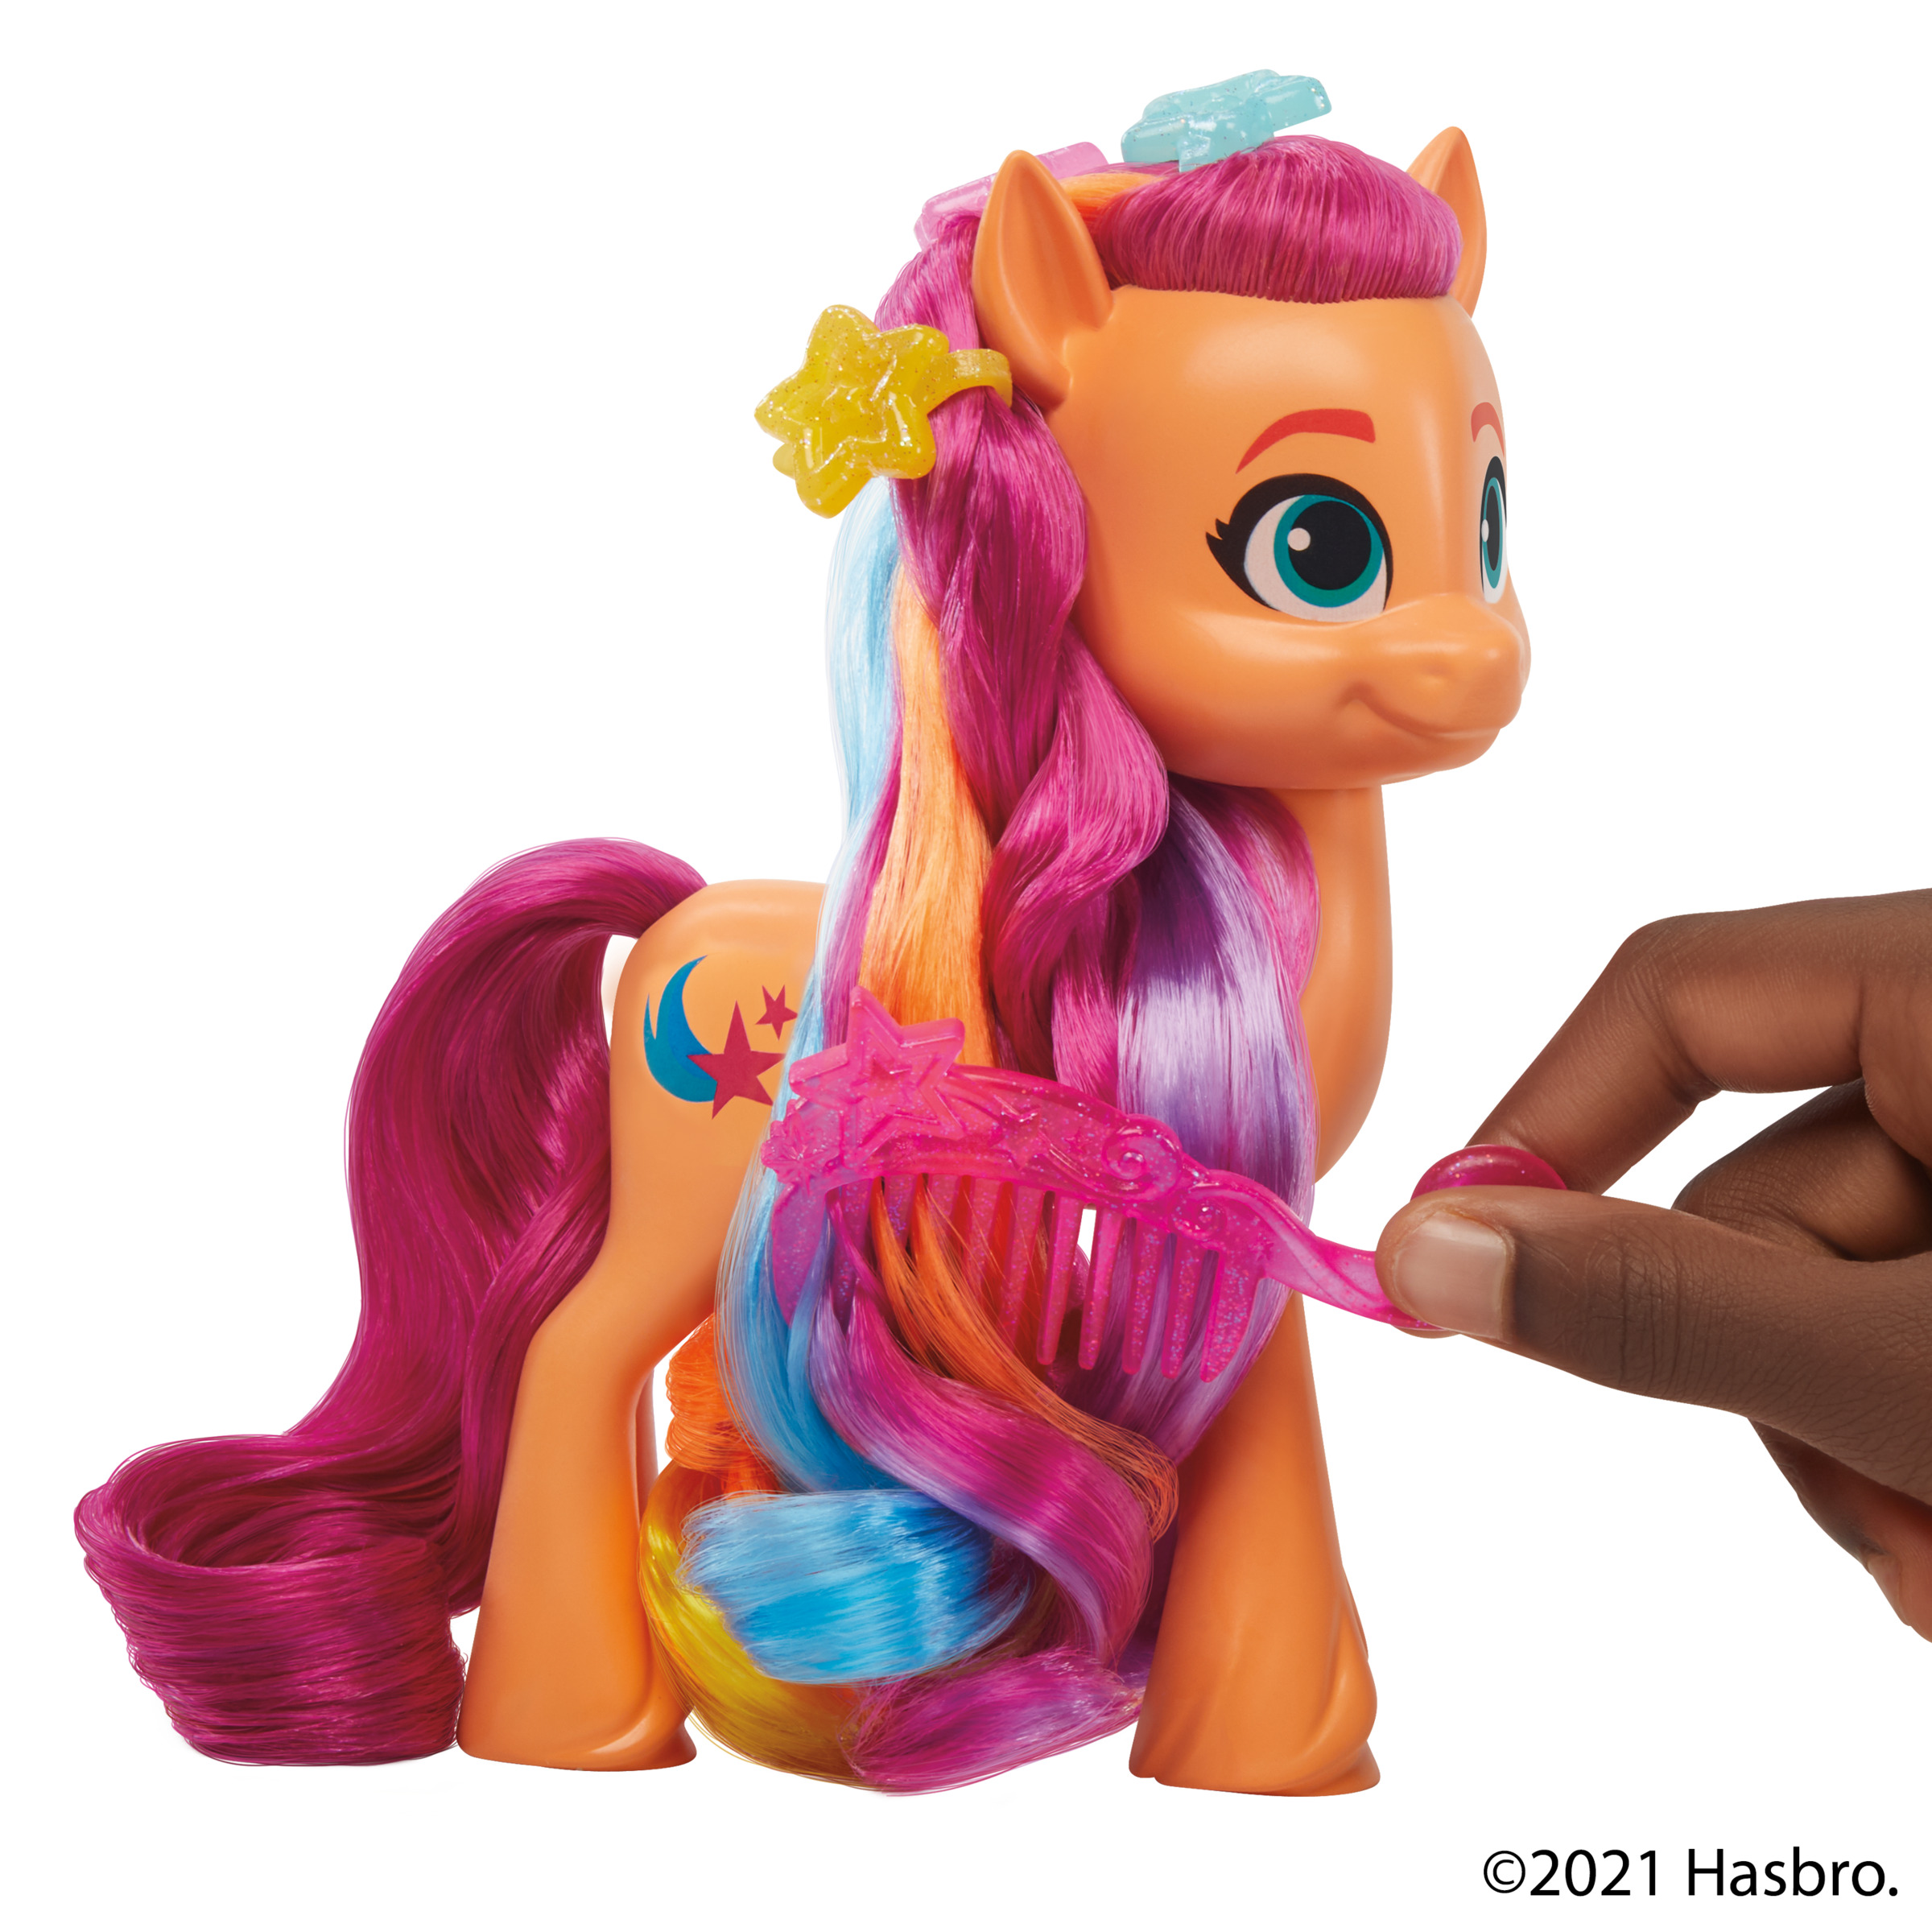 A - MY LITTLE Generation Pony: Sunny Figura PONY Peinados My New Little mágicos Starscout